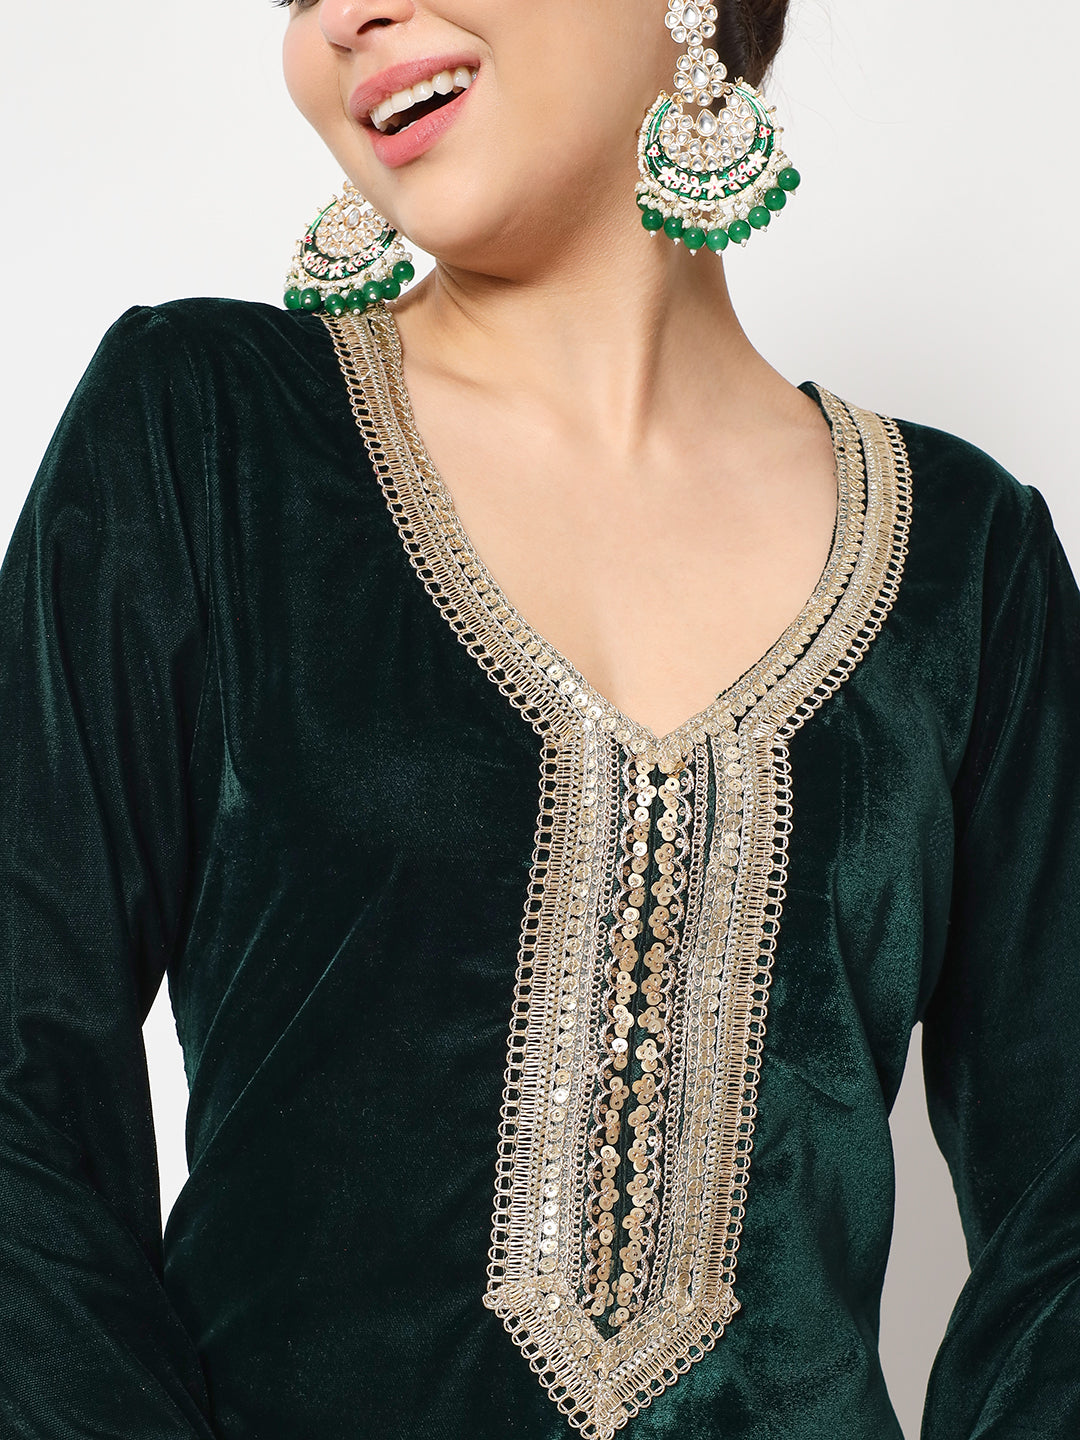 Women's Sweet Green Velvet Straight Kurti With Printed Salwar - Anokherang